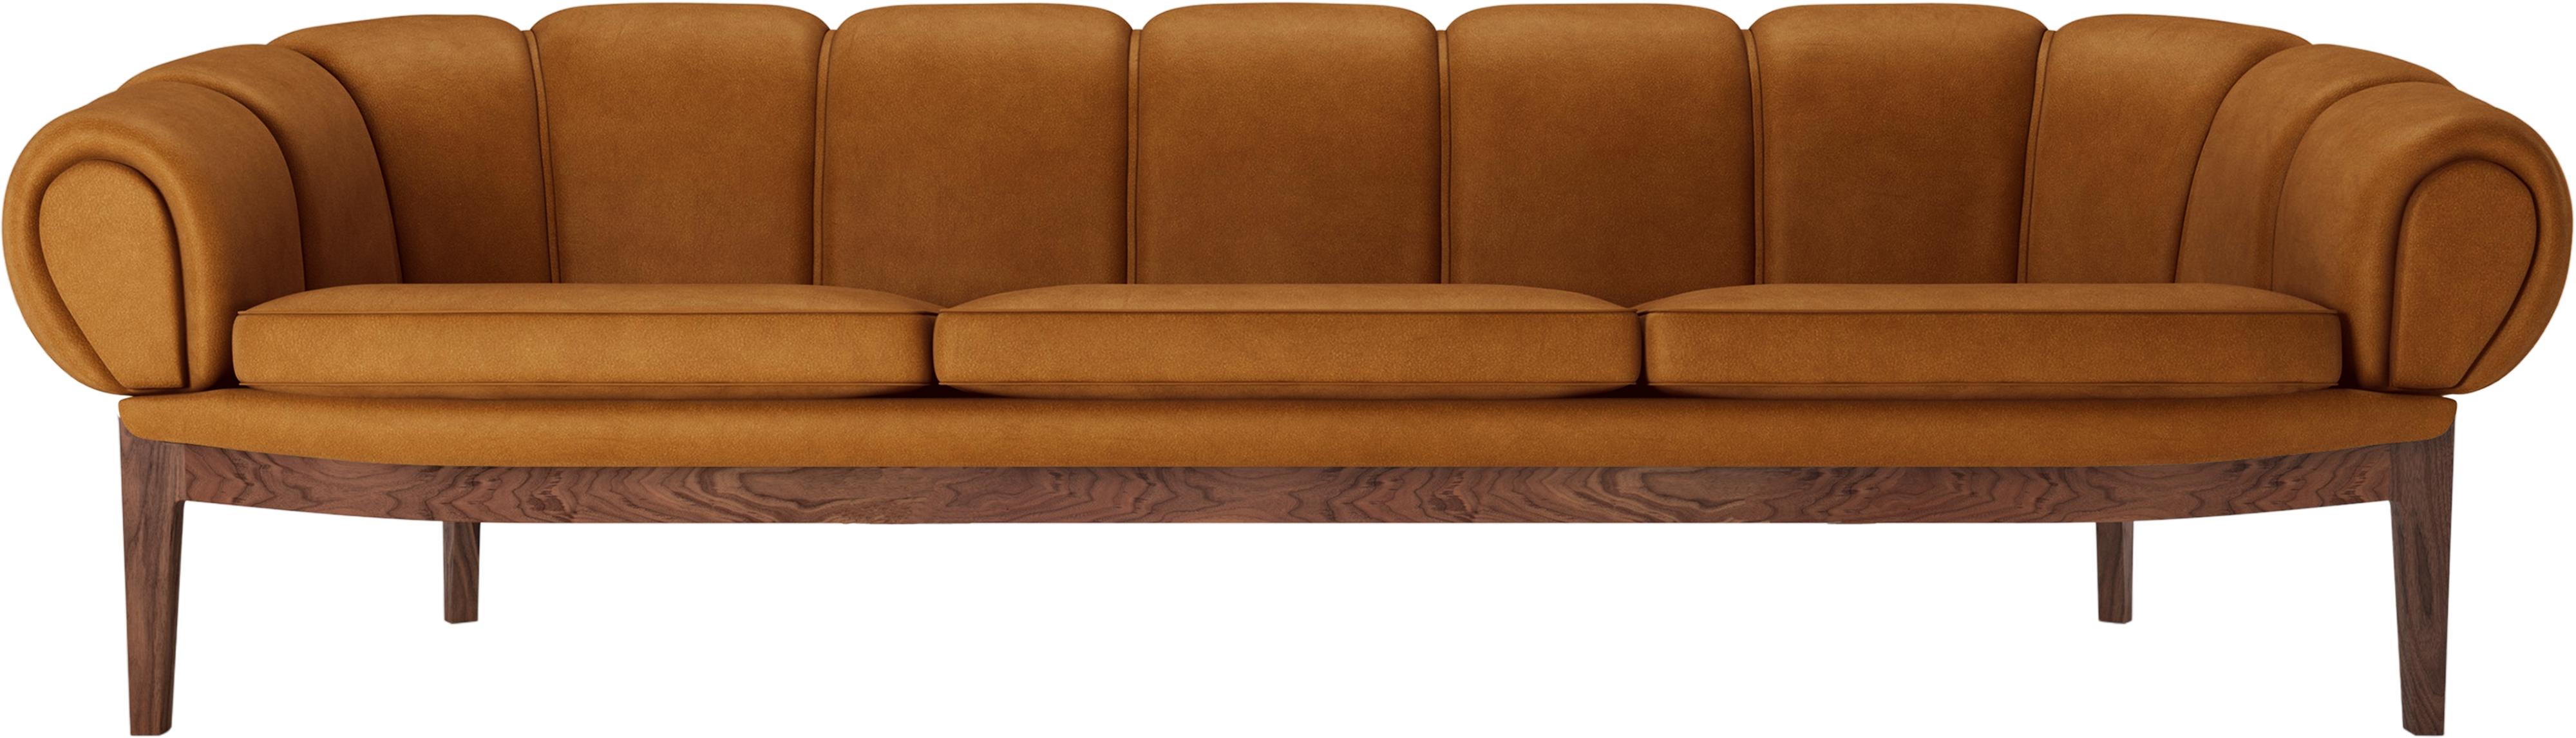 Leather 'Croissant' Sofa by Illum Wikkelsø for Gubi with Oak Legs For Sale 4